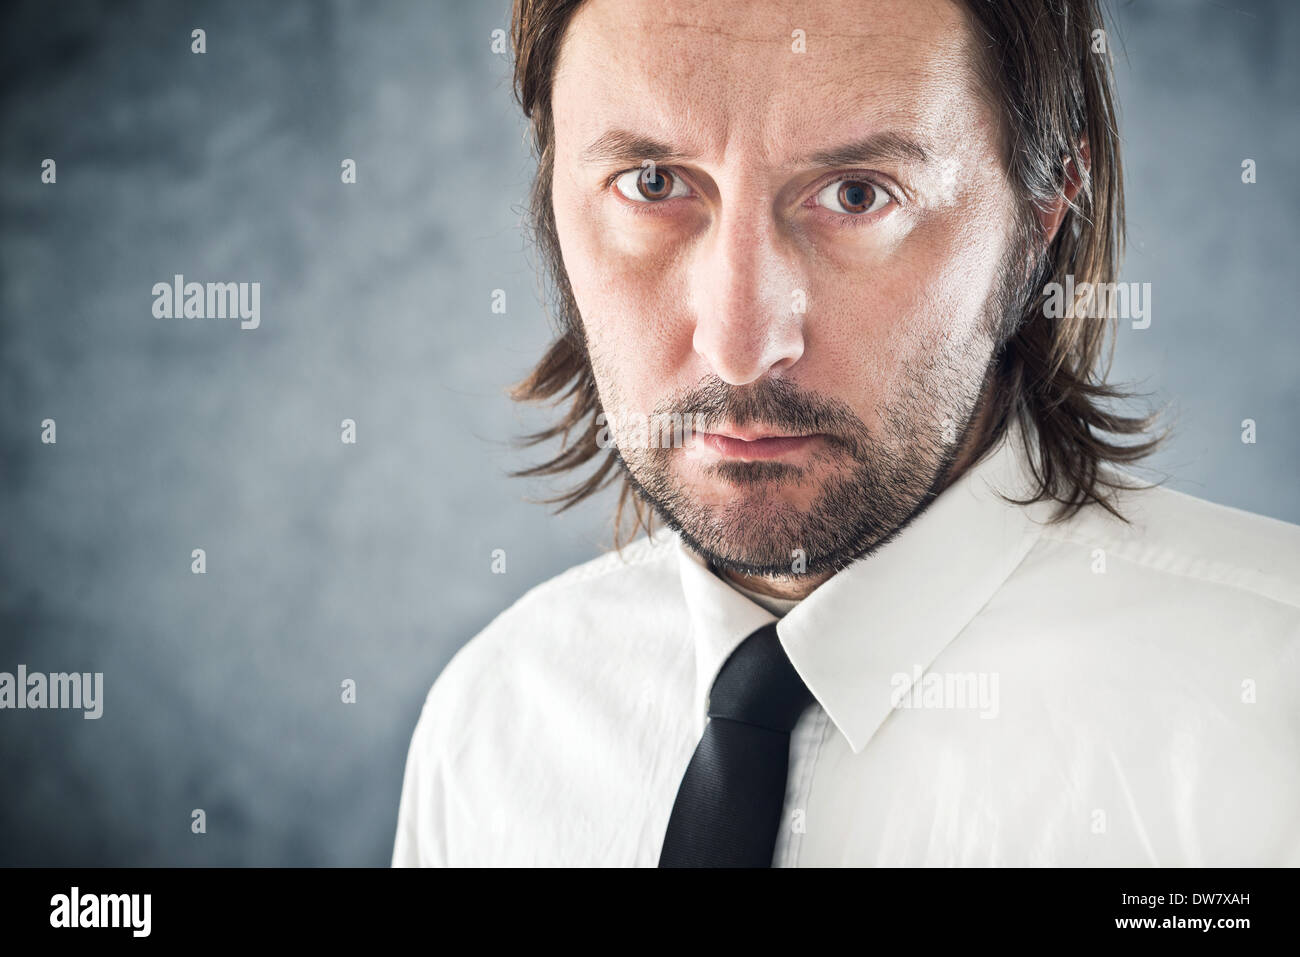 Determined Businessman portrait with copy space. Adult artistic unshaven businessman. Stock Photo